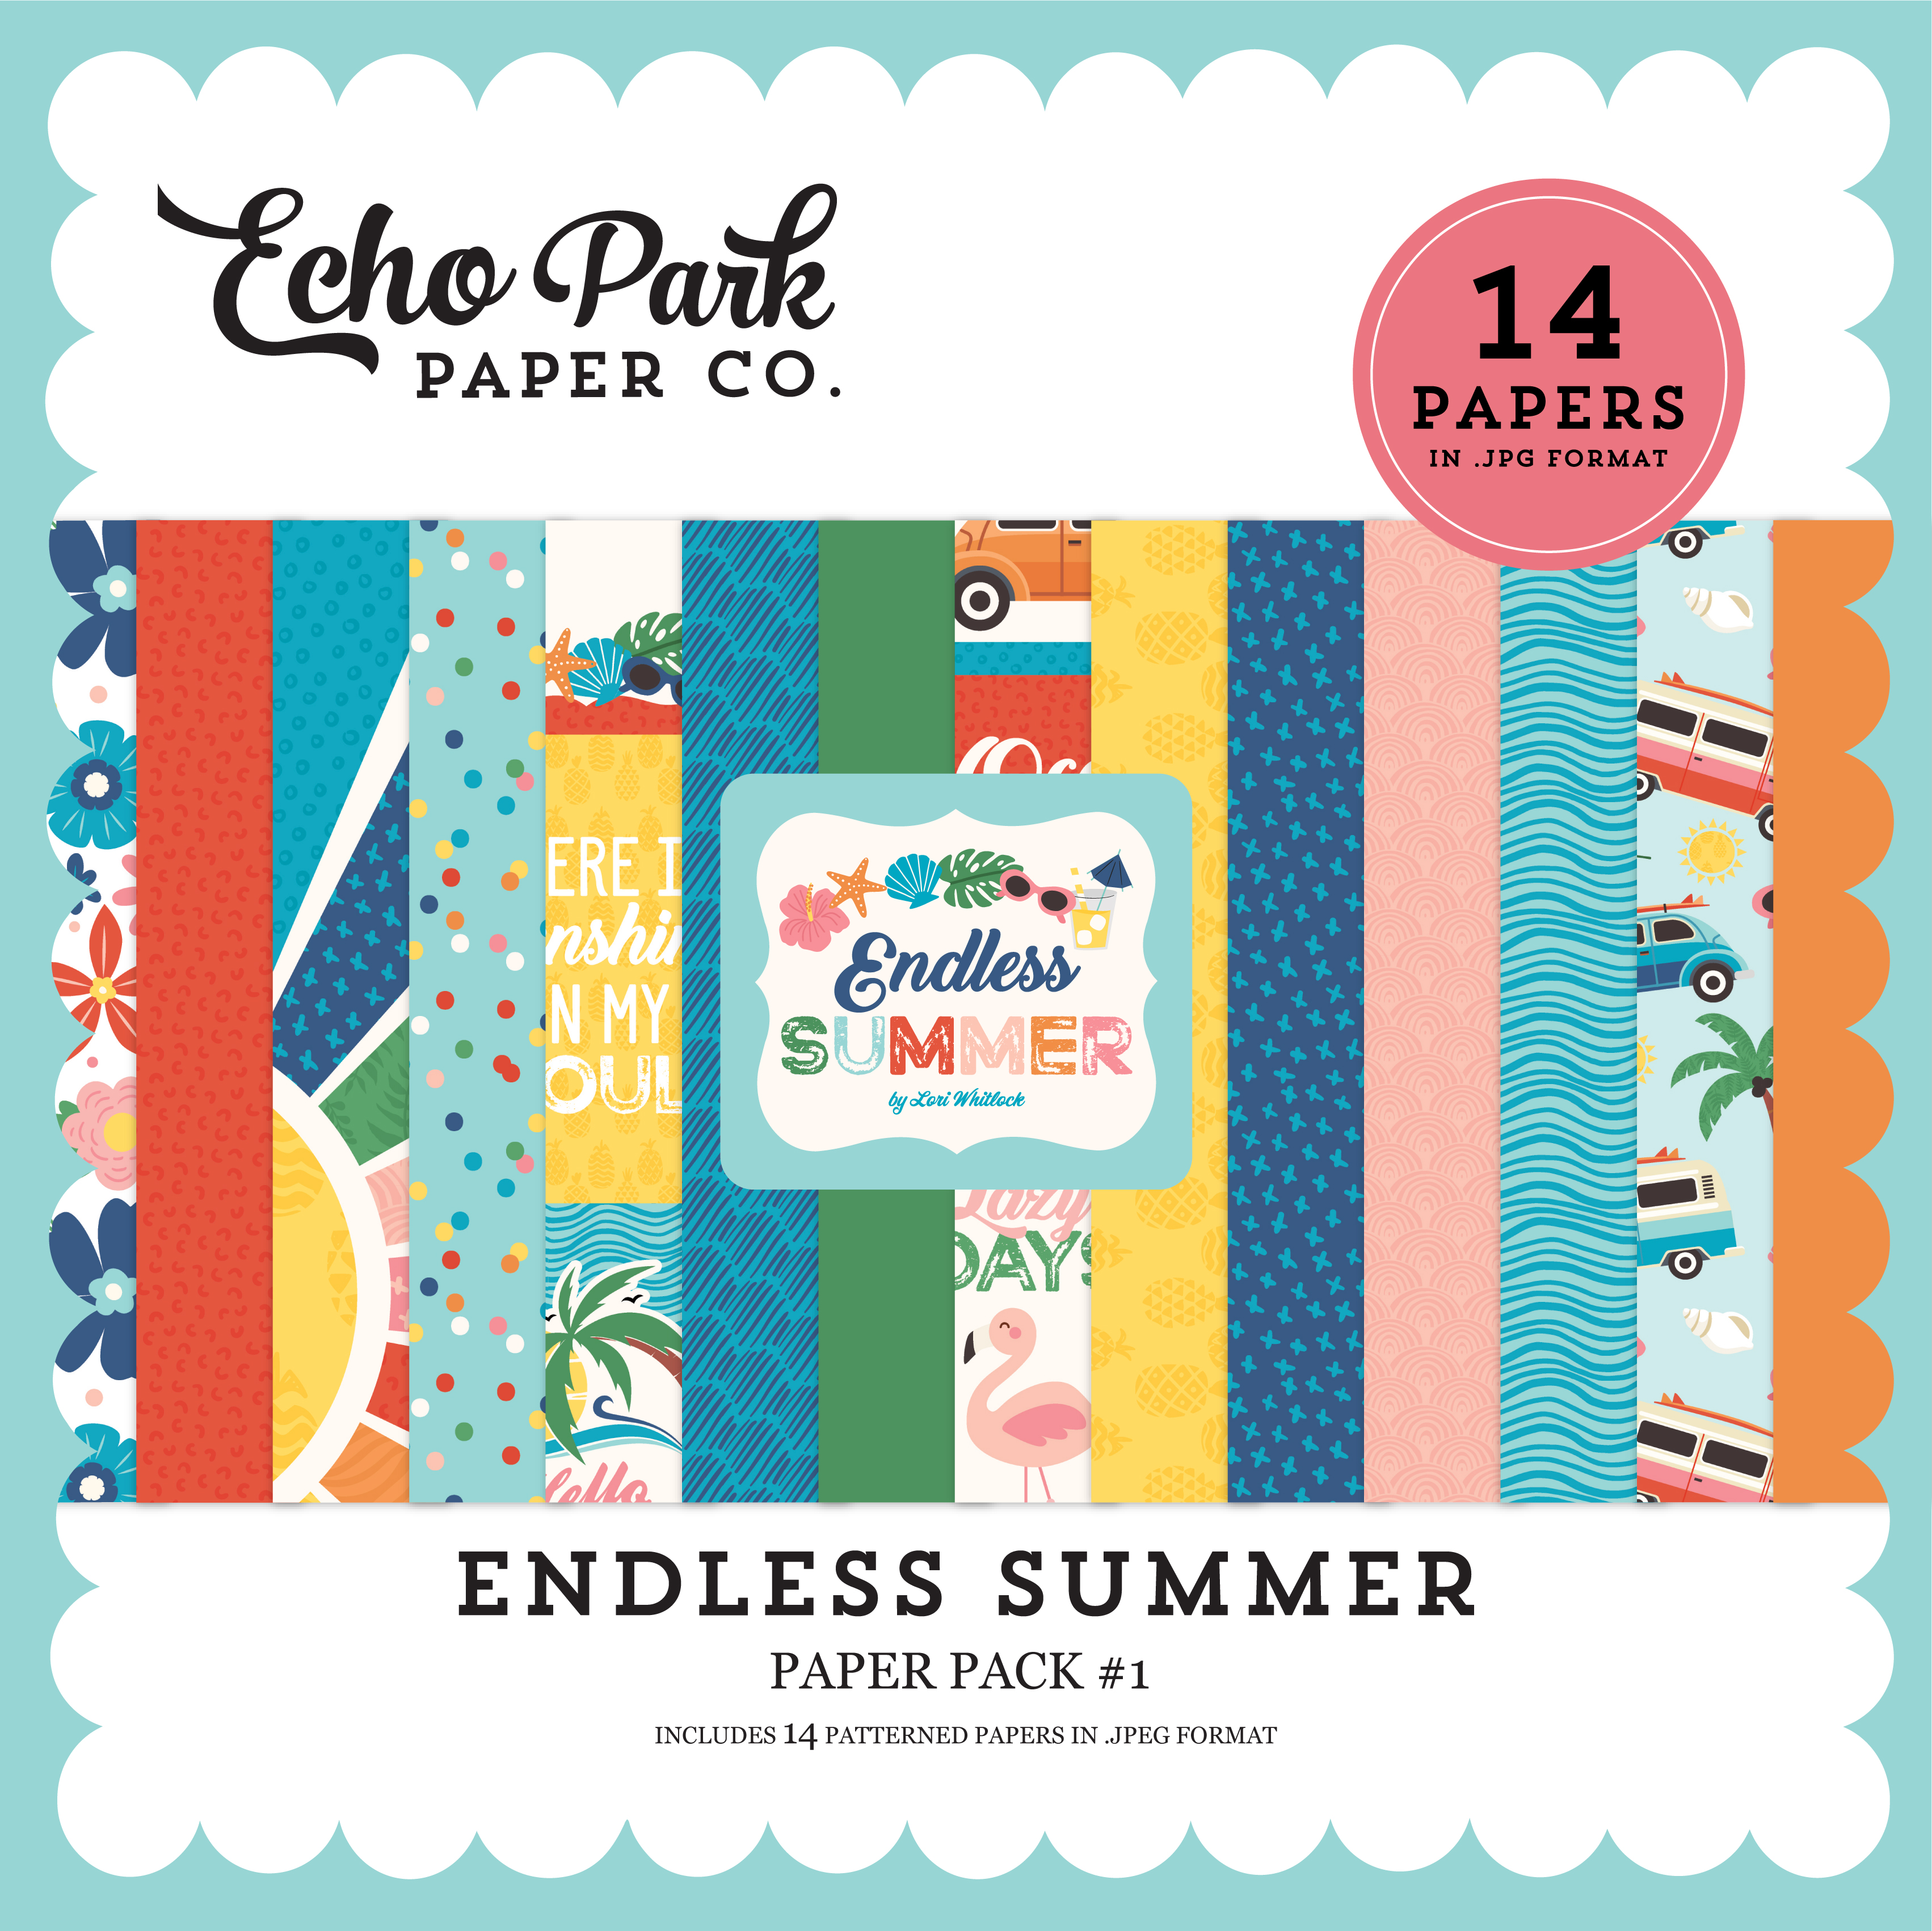 Endless Summer Paper Pack #1